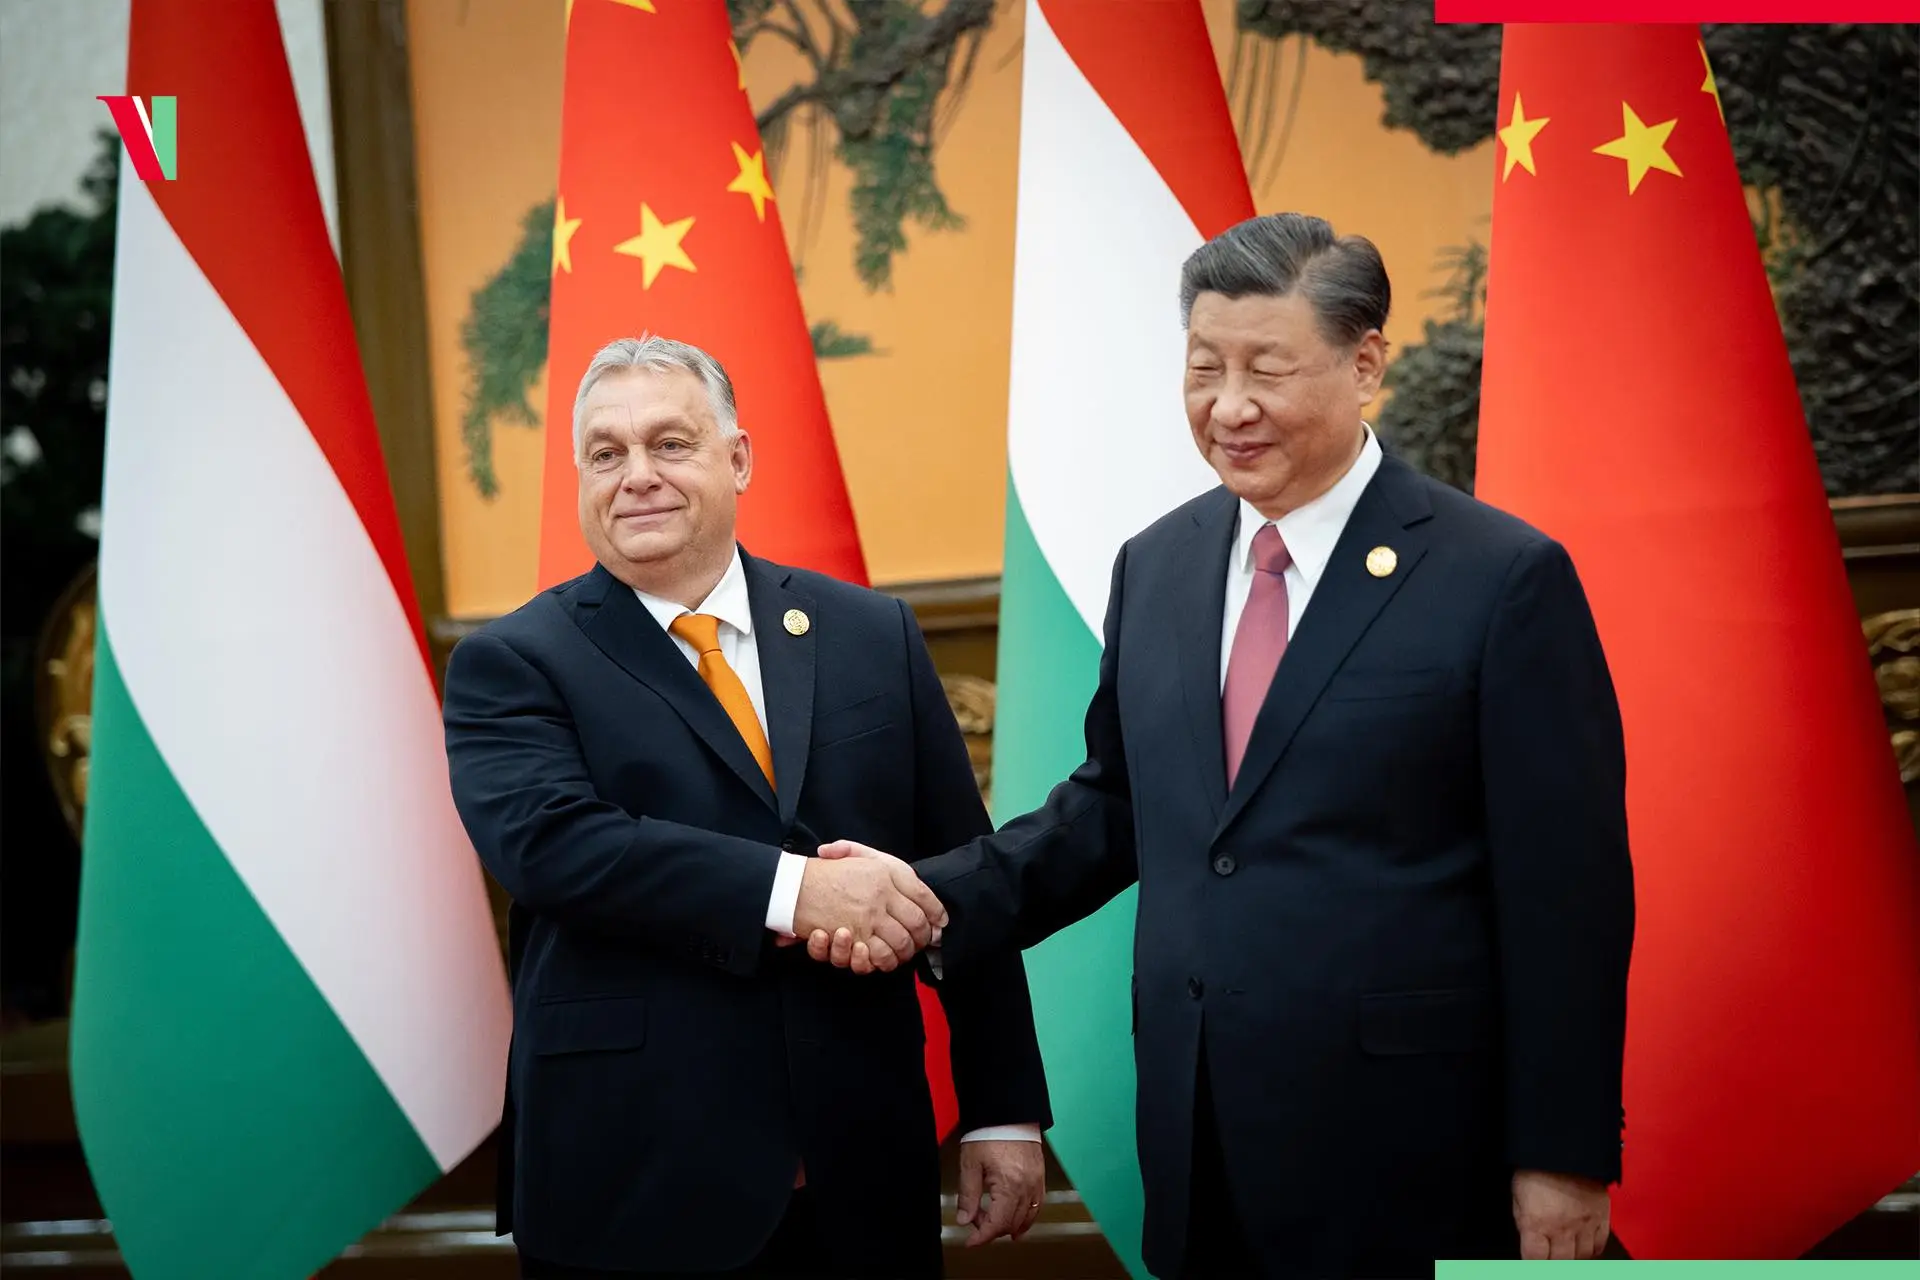 PM Orbán Xi Jinping in Beijing